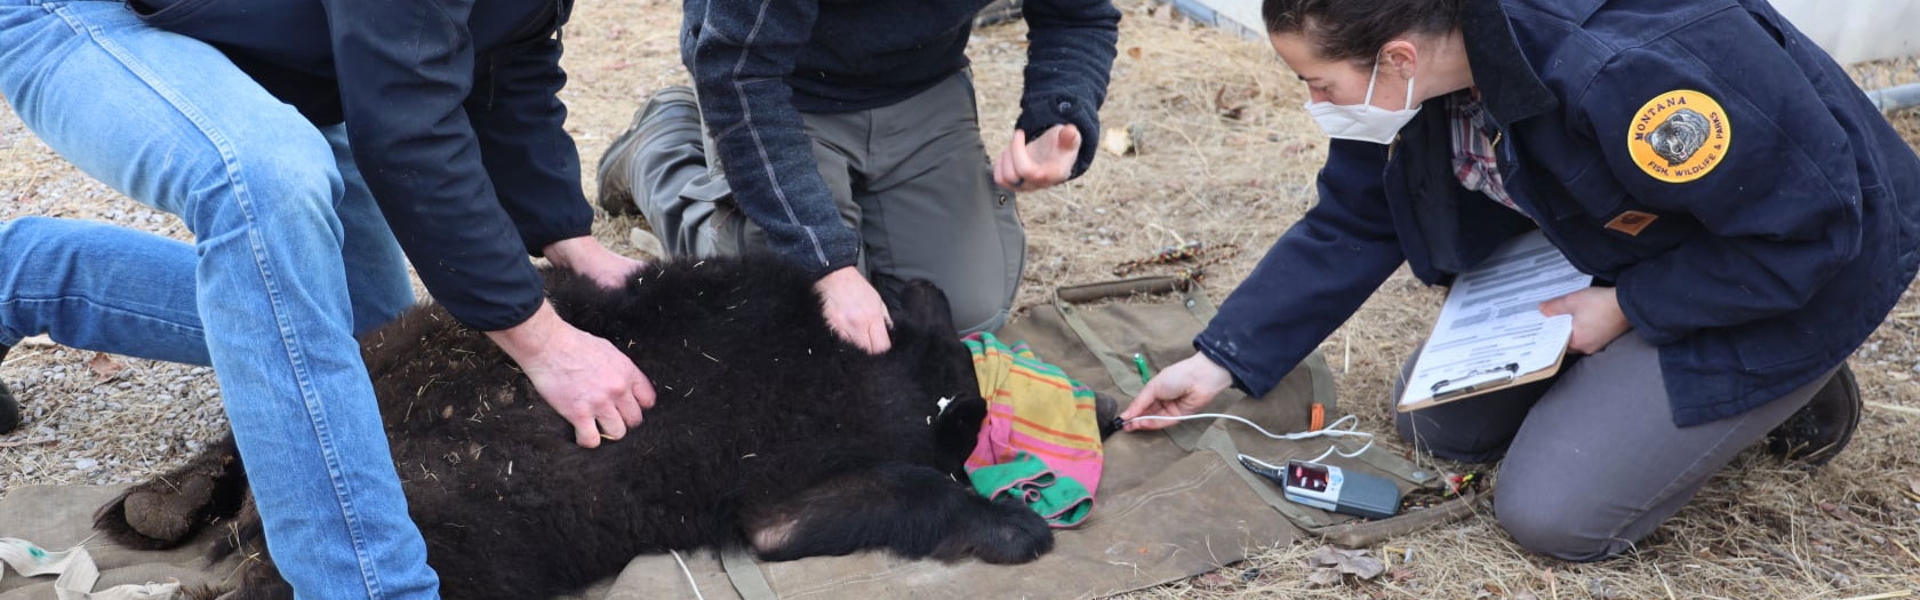 medical exam on small black bear